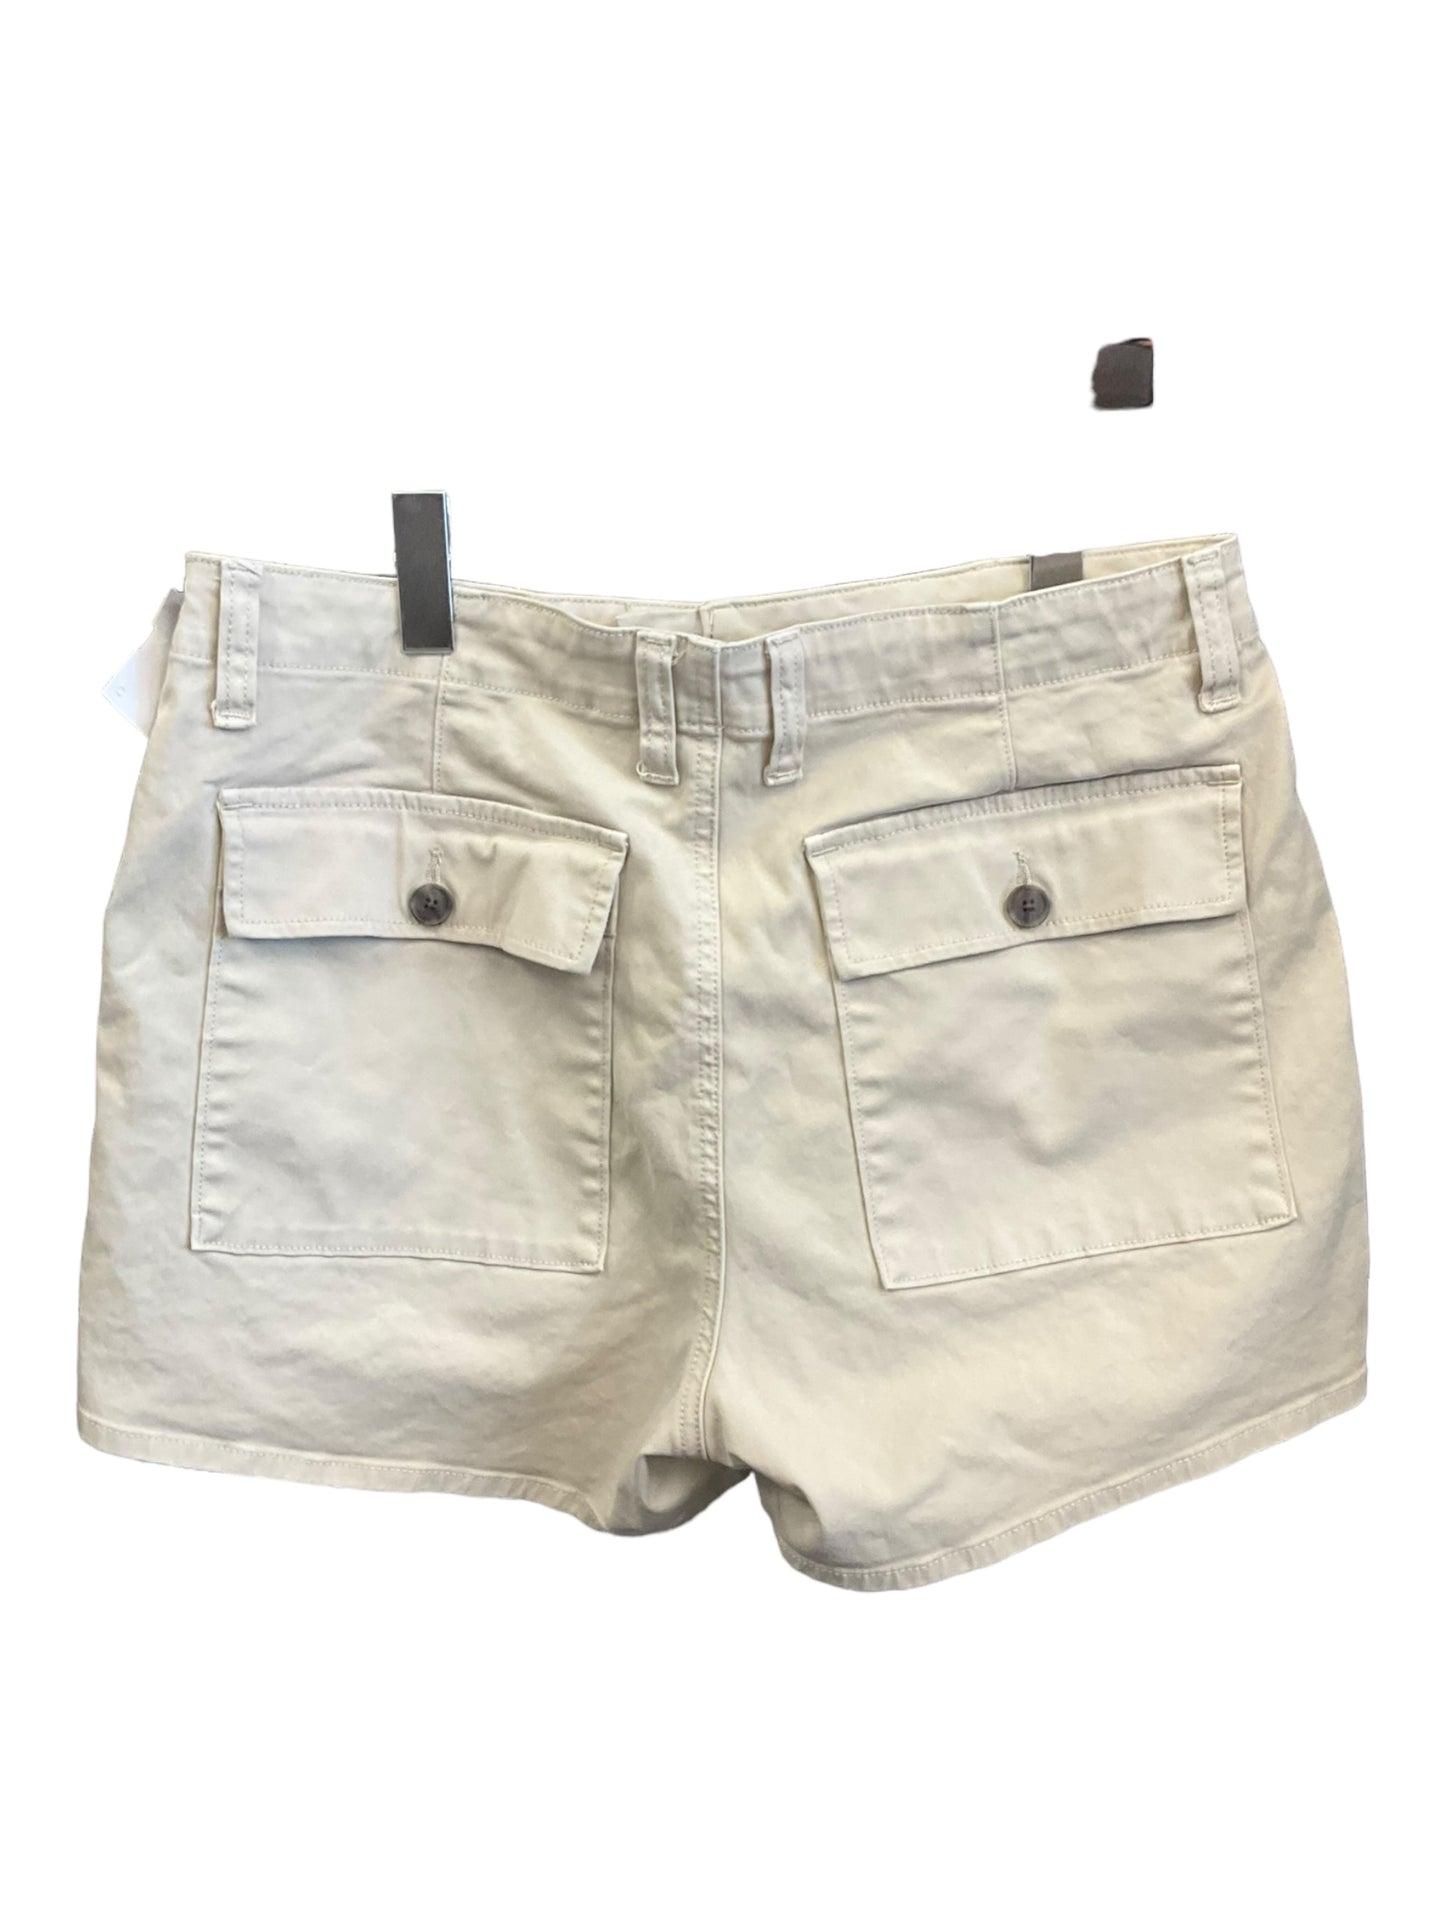 Shorts By Hudson  Size: 12